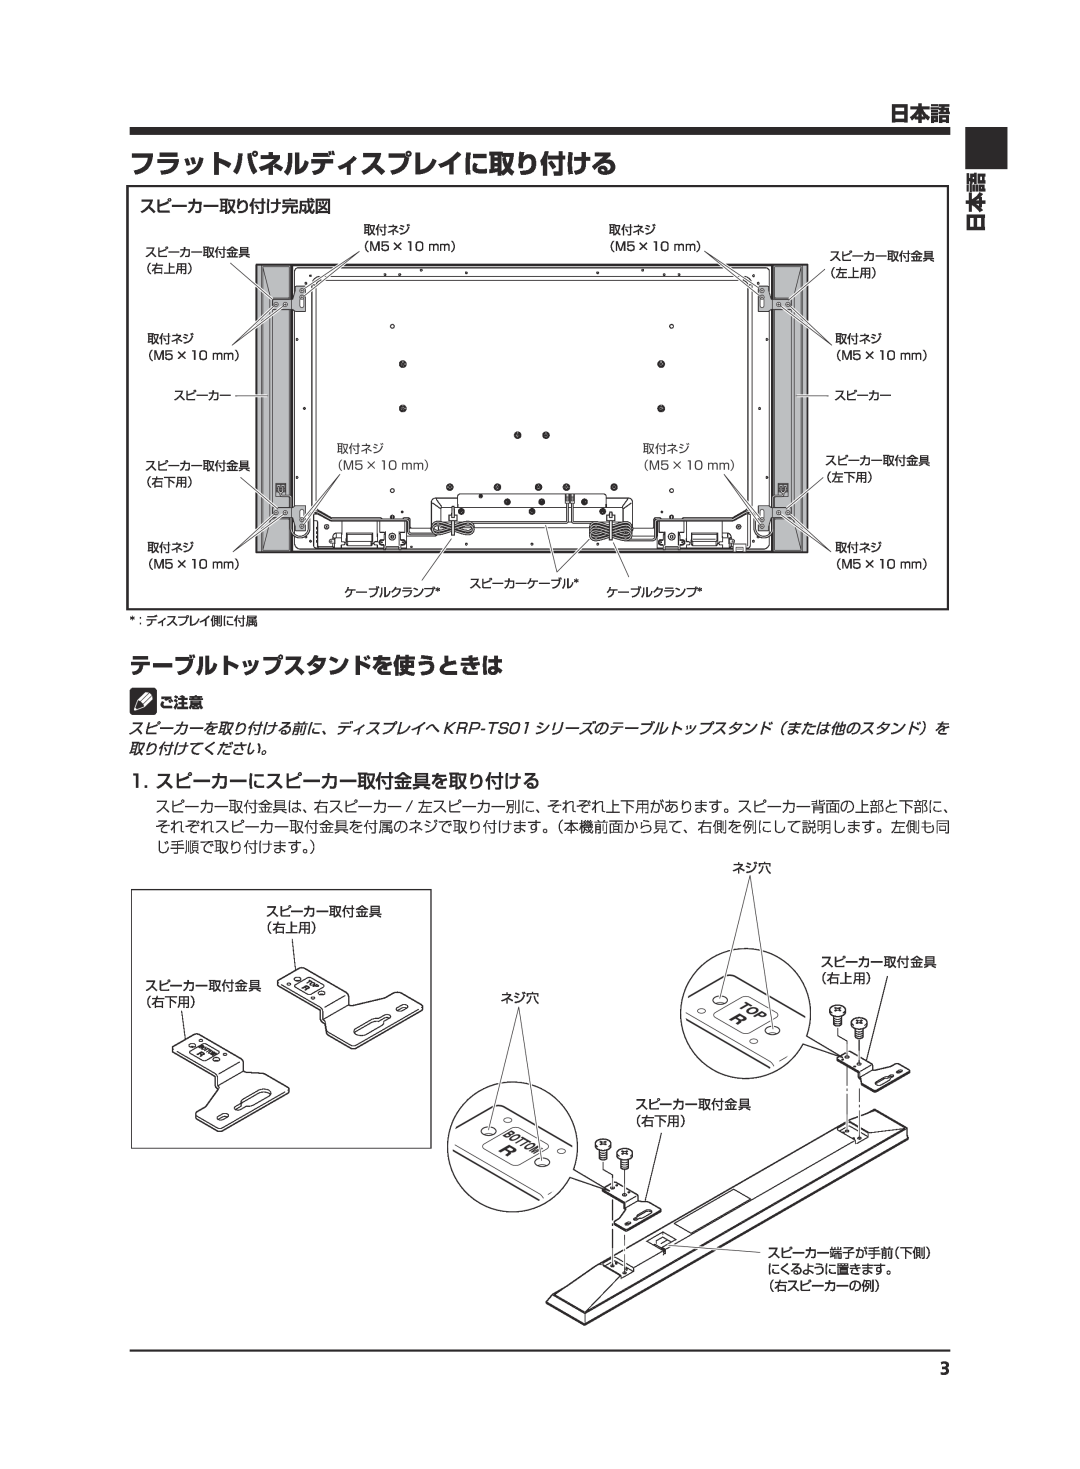 Pioneer KRP-S02 manual フラットパネルディスプレイに取り付ける, テーブルトップスタンドを使うときは, スピーカー取り付け完成図 